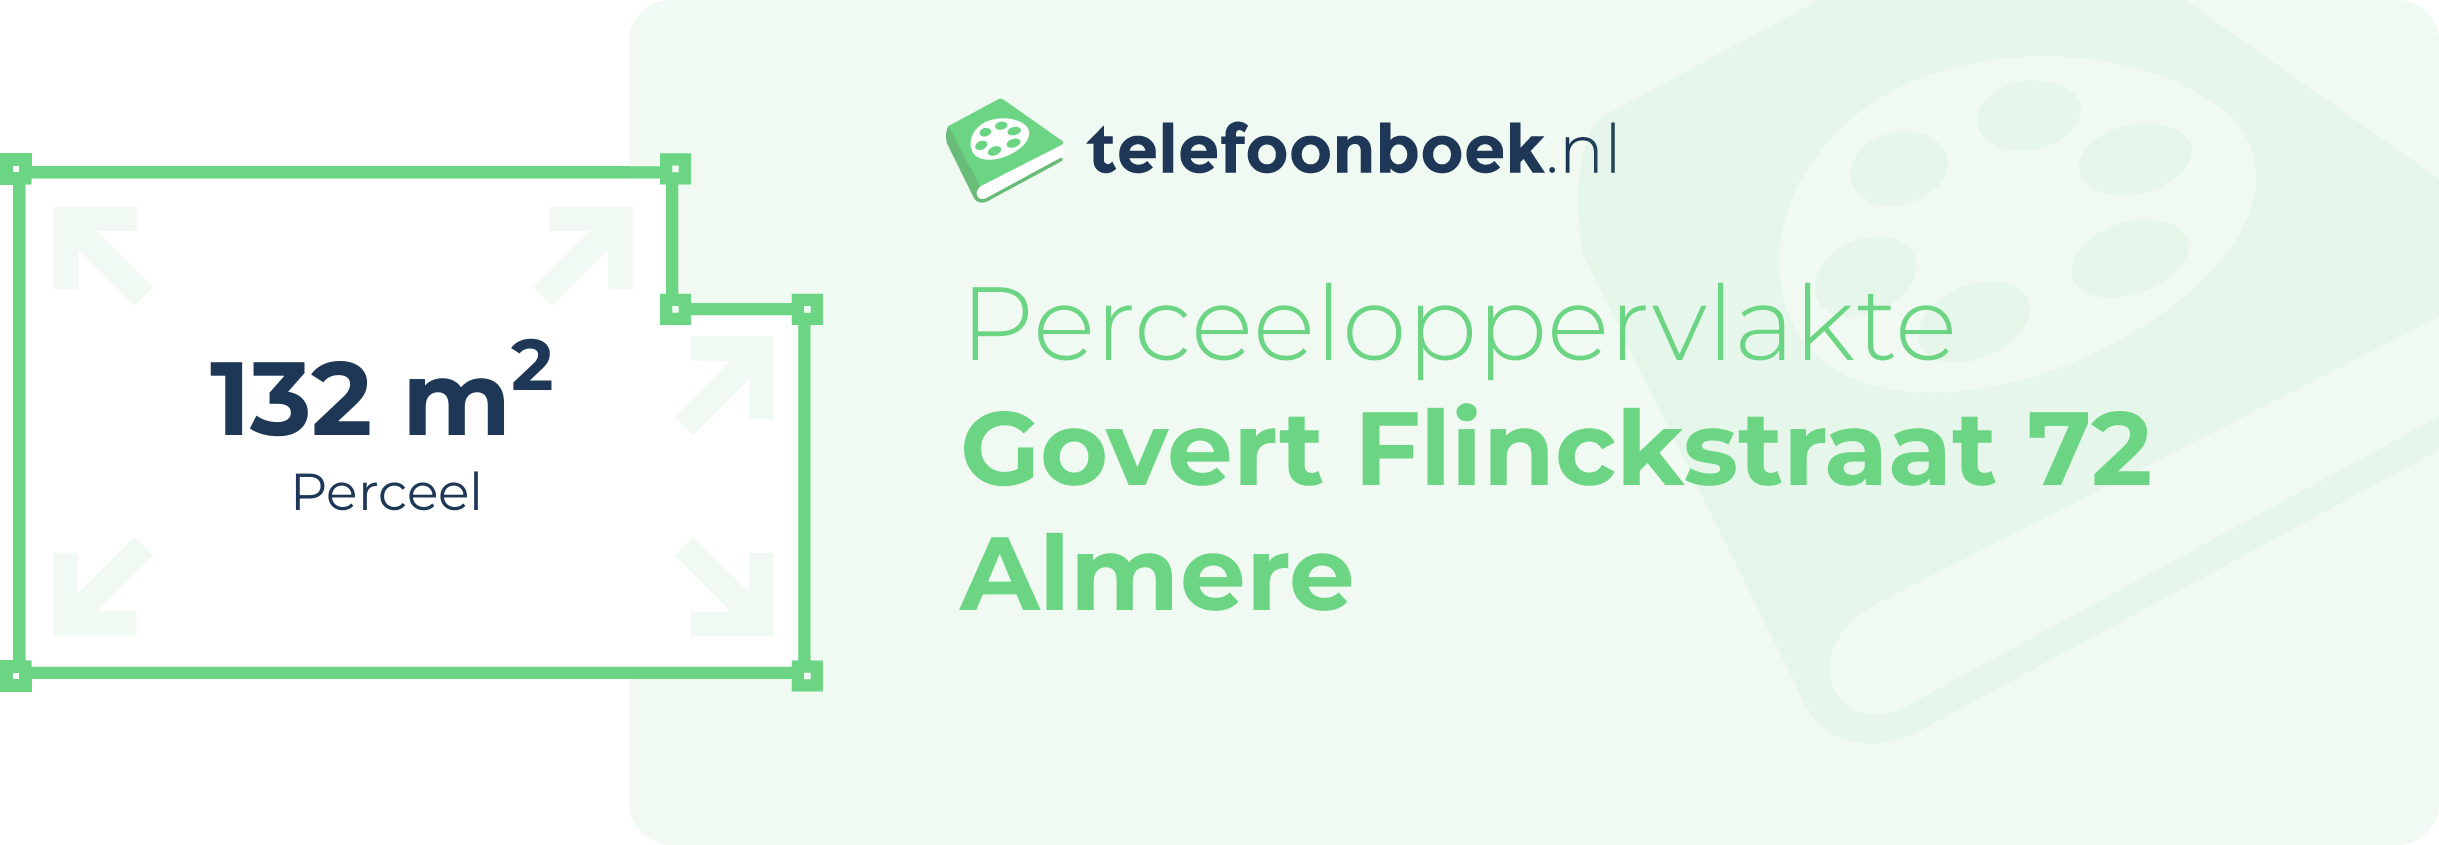 Perceeloppervlakte Govert Flinckstraat 72 Almere